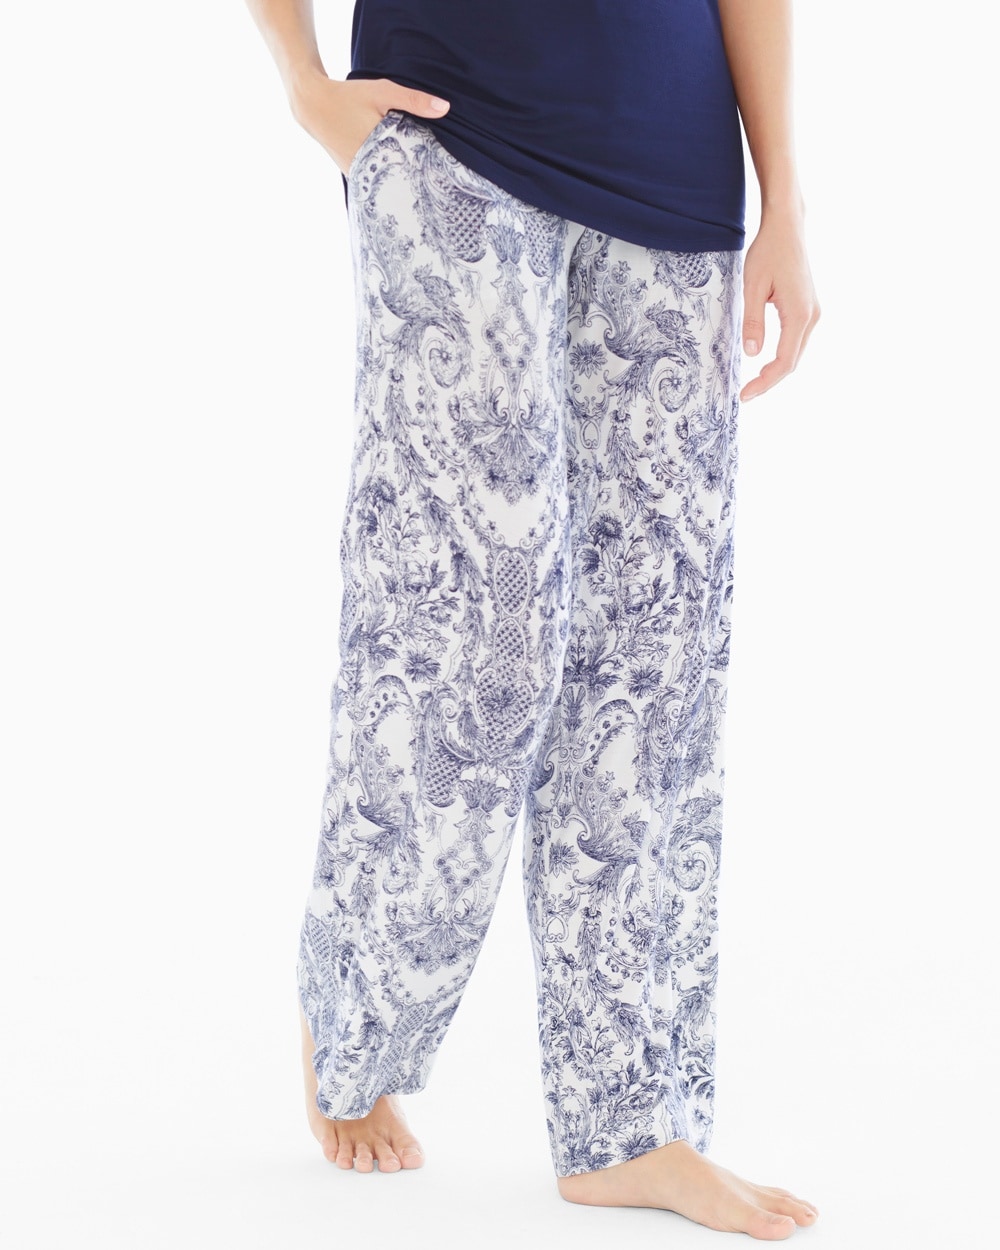 Cool Nights Tall Inseam Pajama Pants Provincial Ivory - Soma